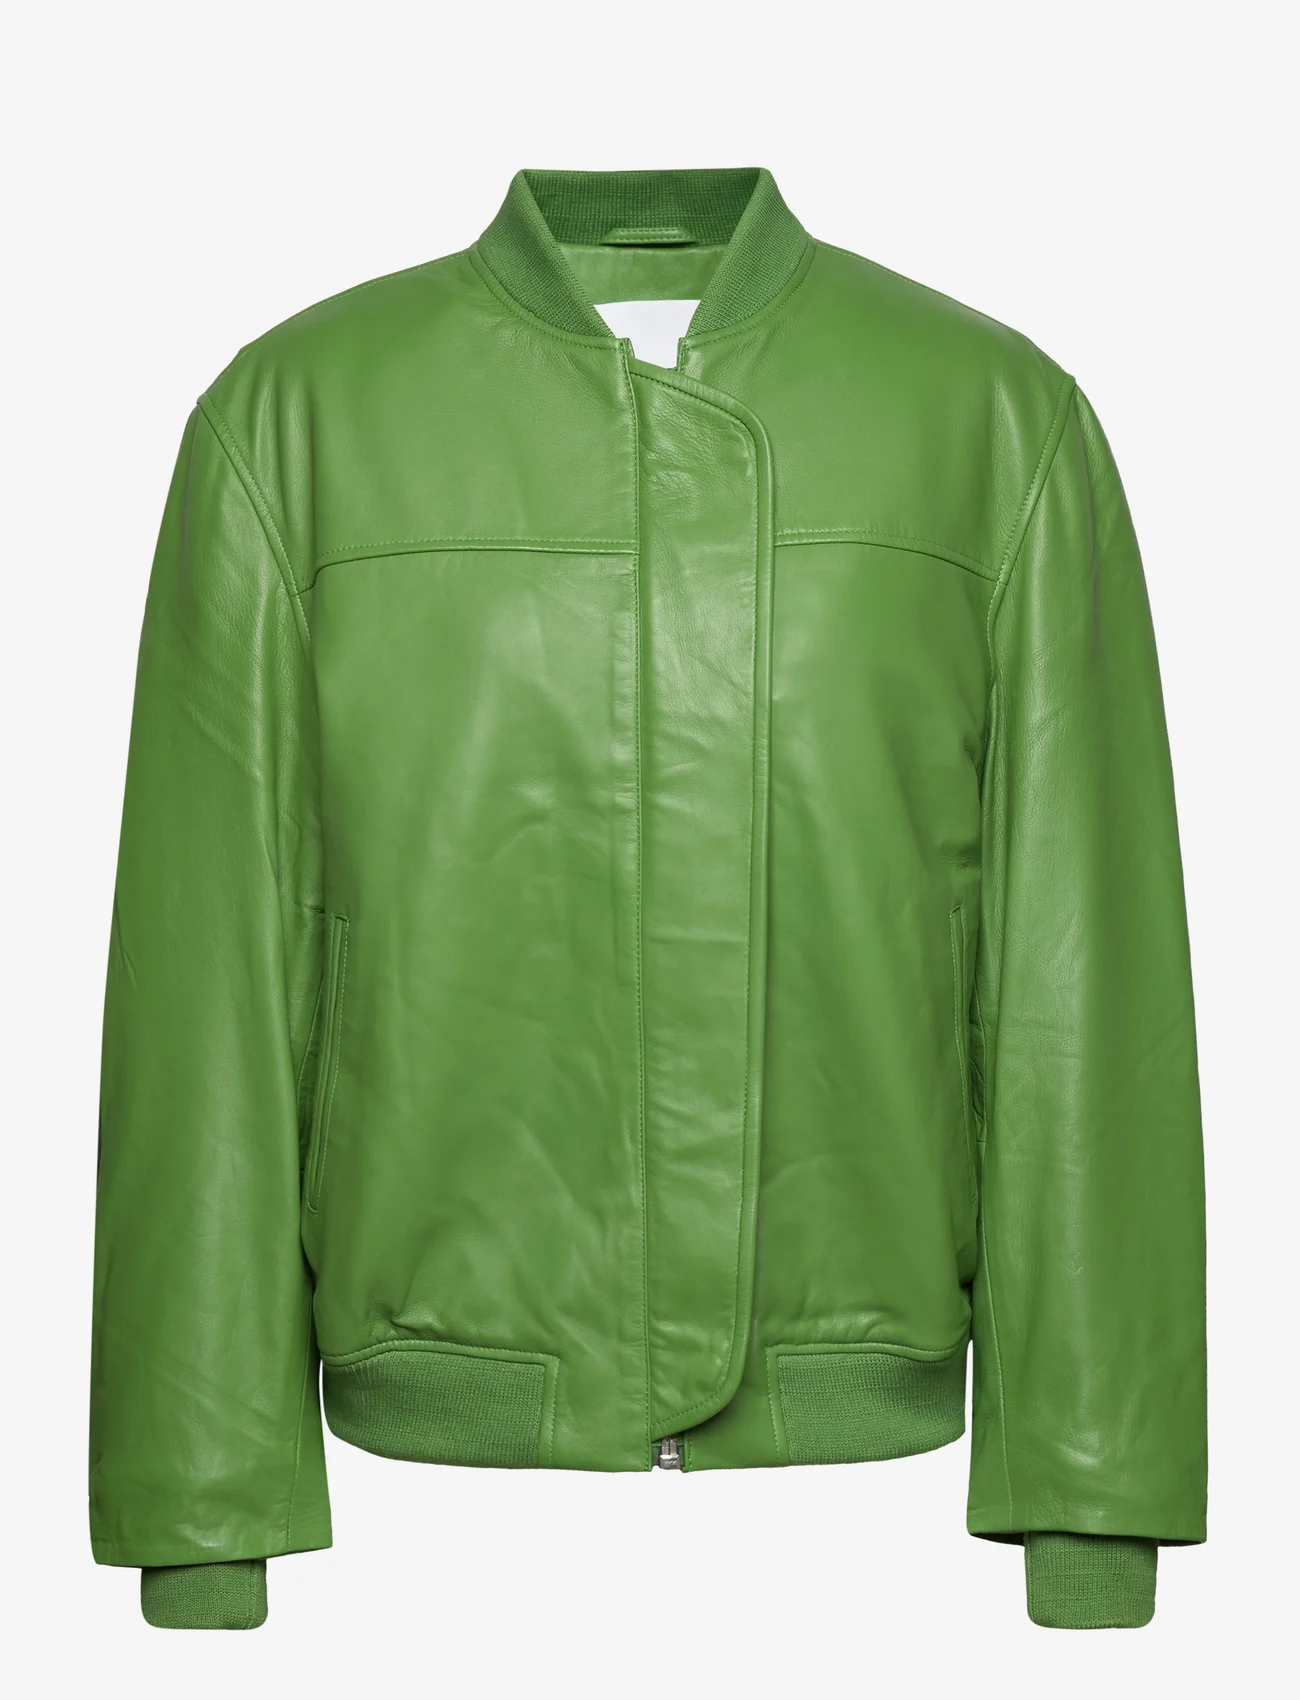 REMAIN Birger Christensen - Leather Bomber Jacket - spring jackets - forest green - 0